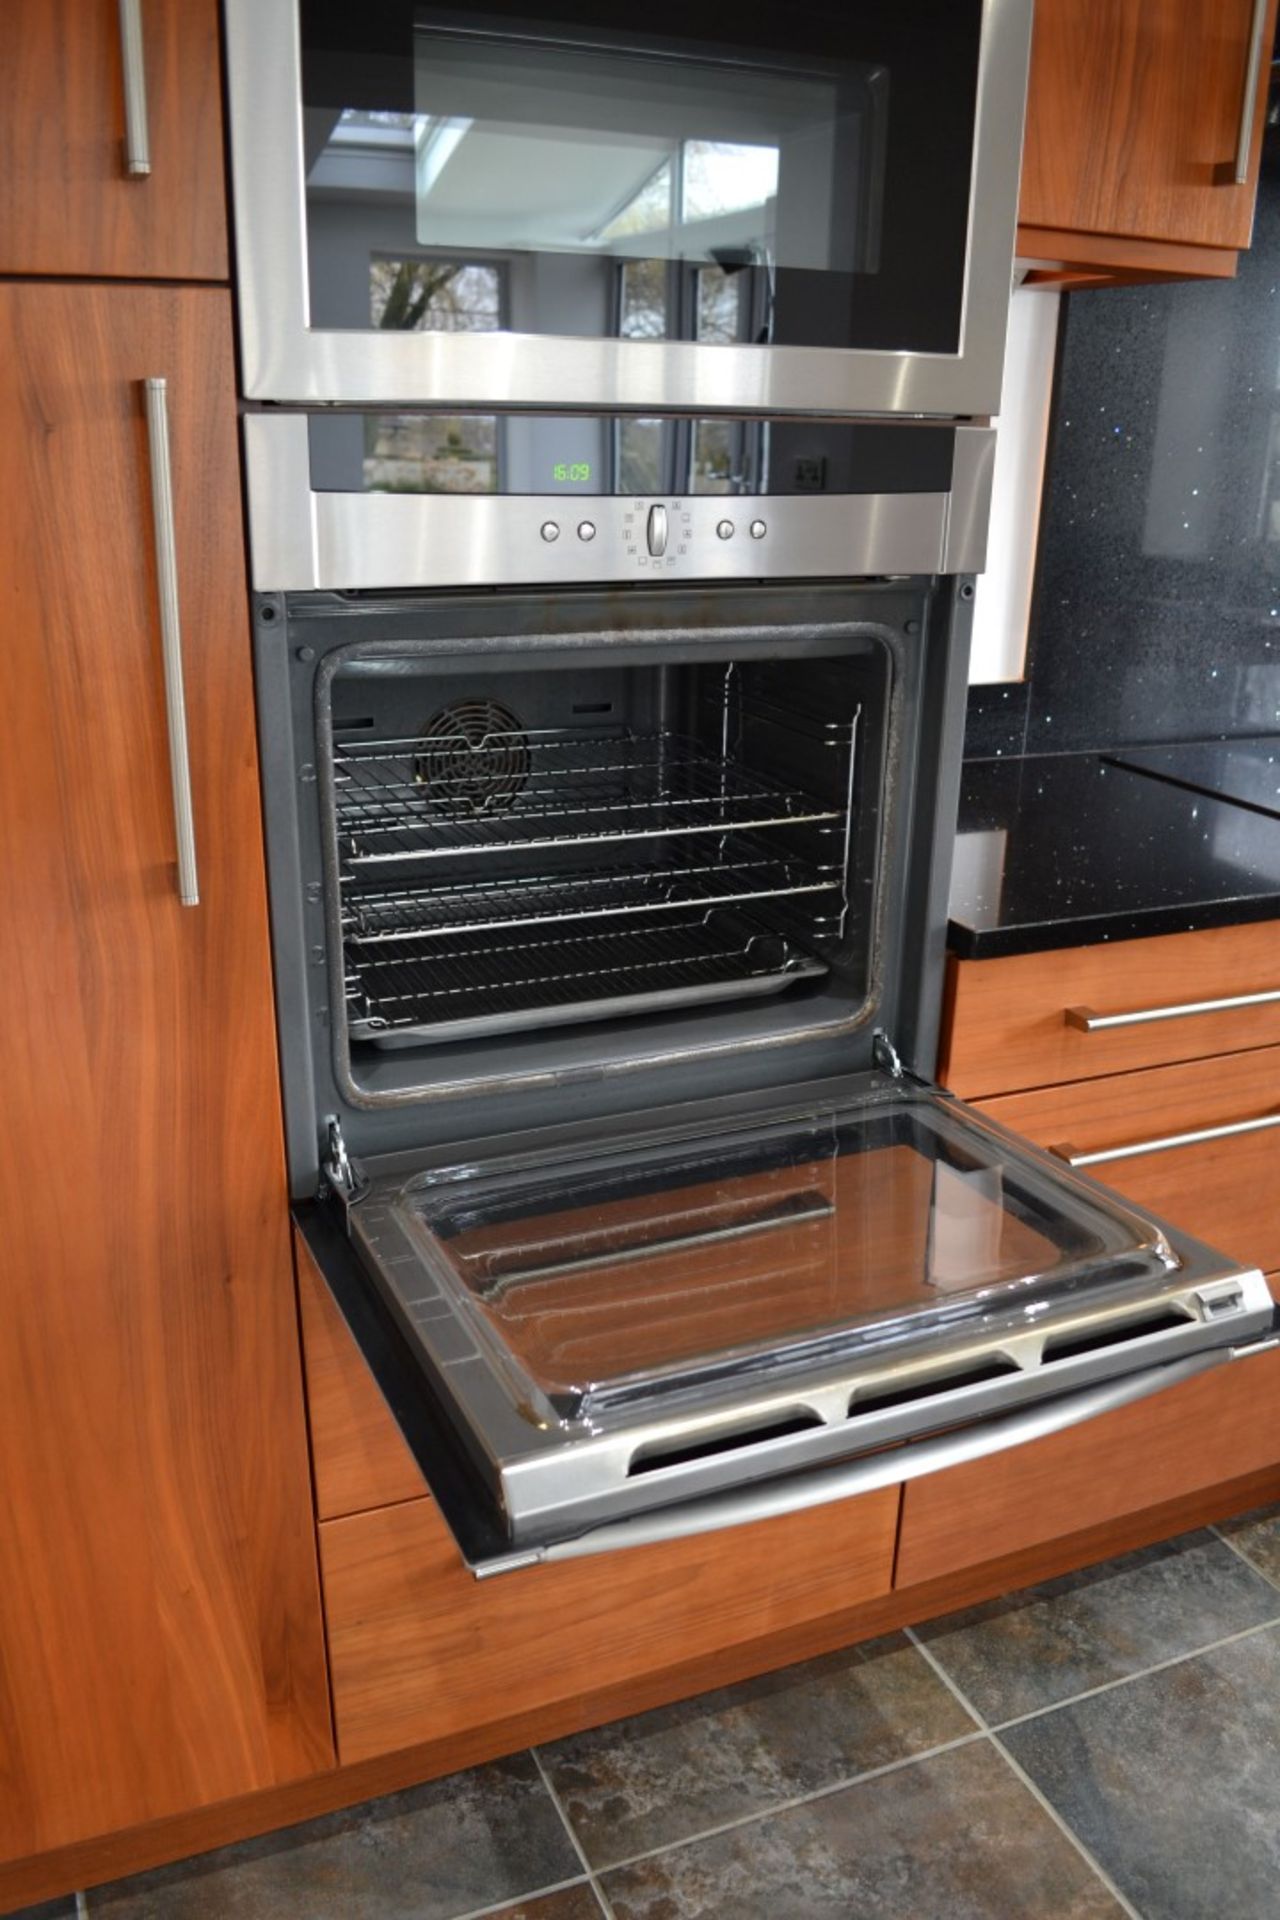 1 x Kitchen Design Bespoke Fitted Kitchen With Silestone Worktops & Neff Appliances - Superb - Image 47 of 59